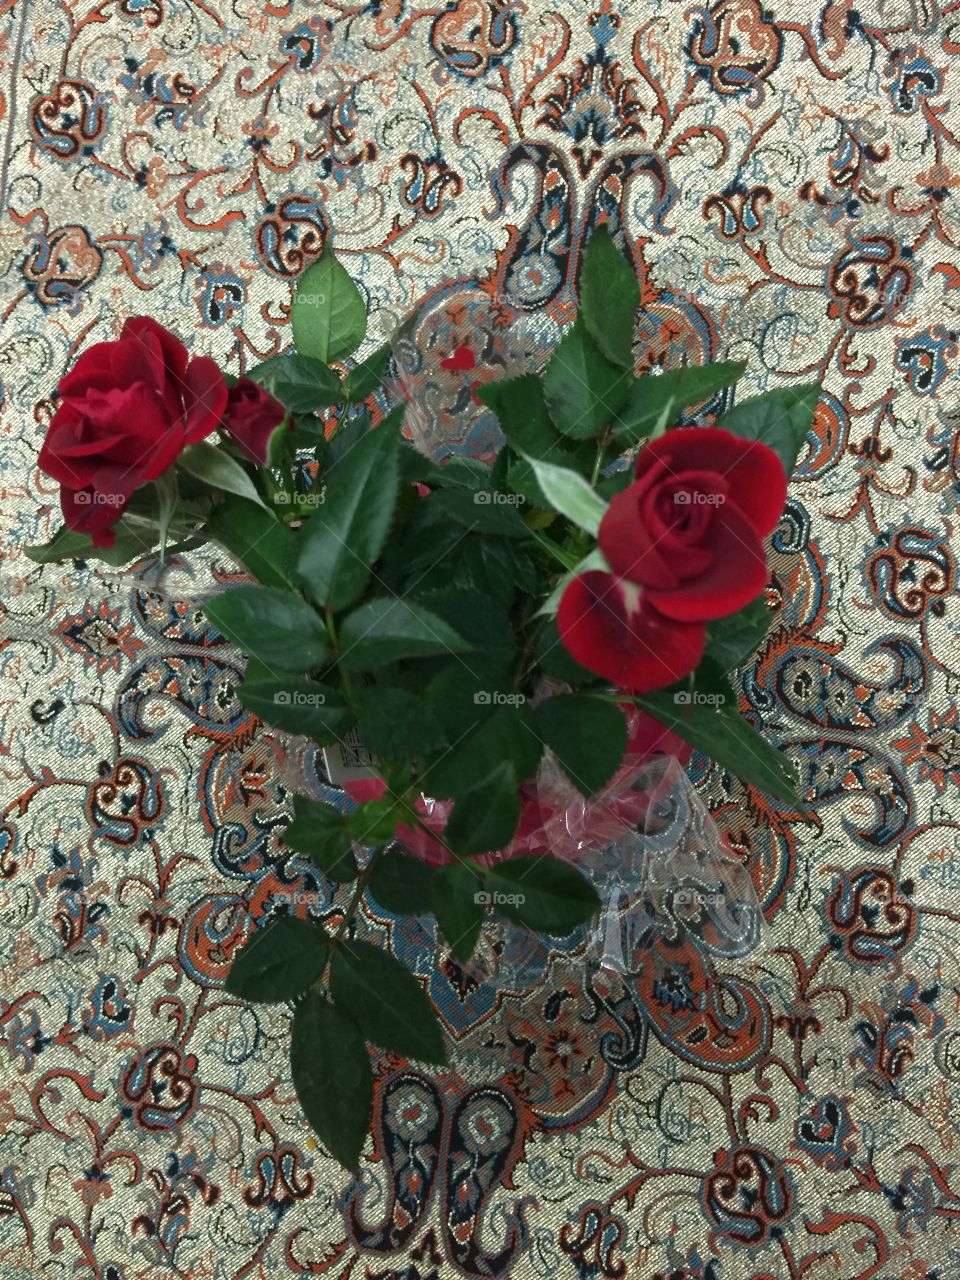 Red rose
Flower